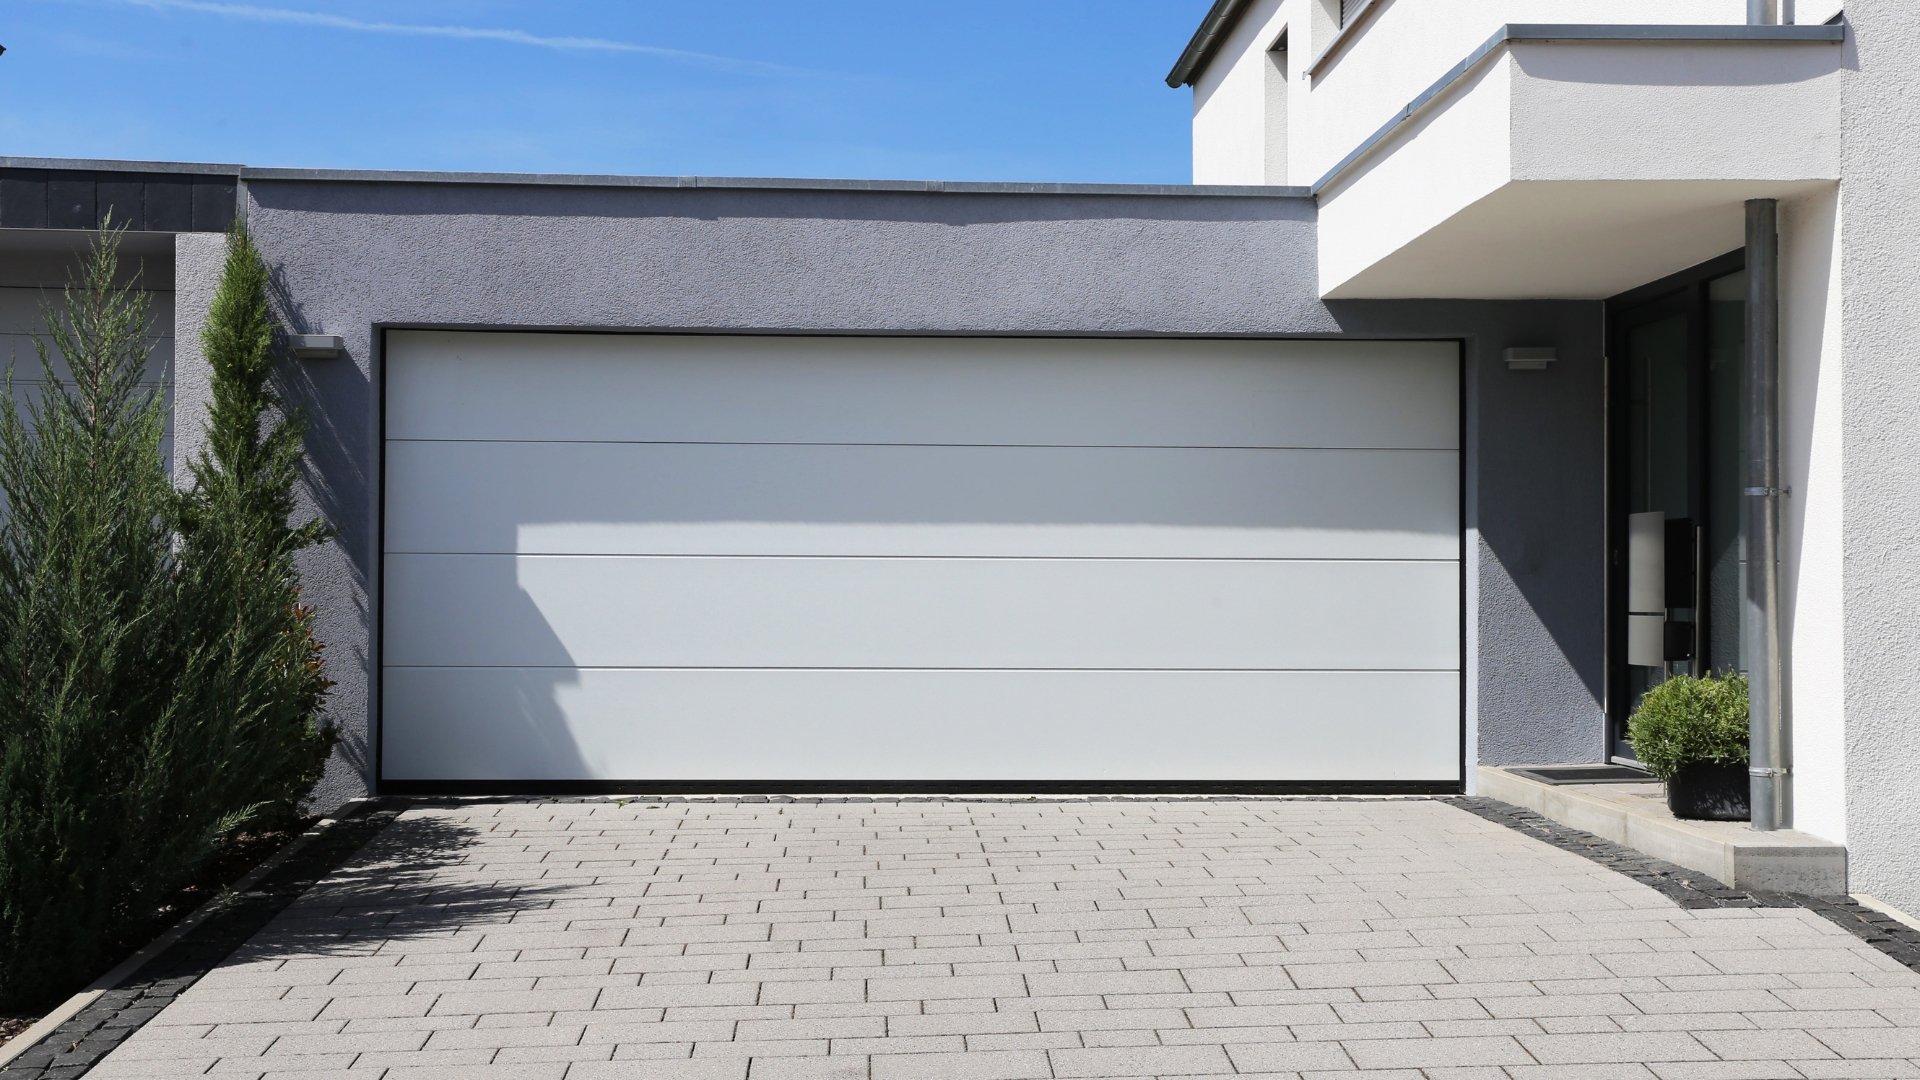 A house with one of the most common types of garage doors: steel garage door